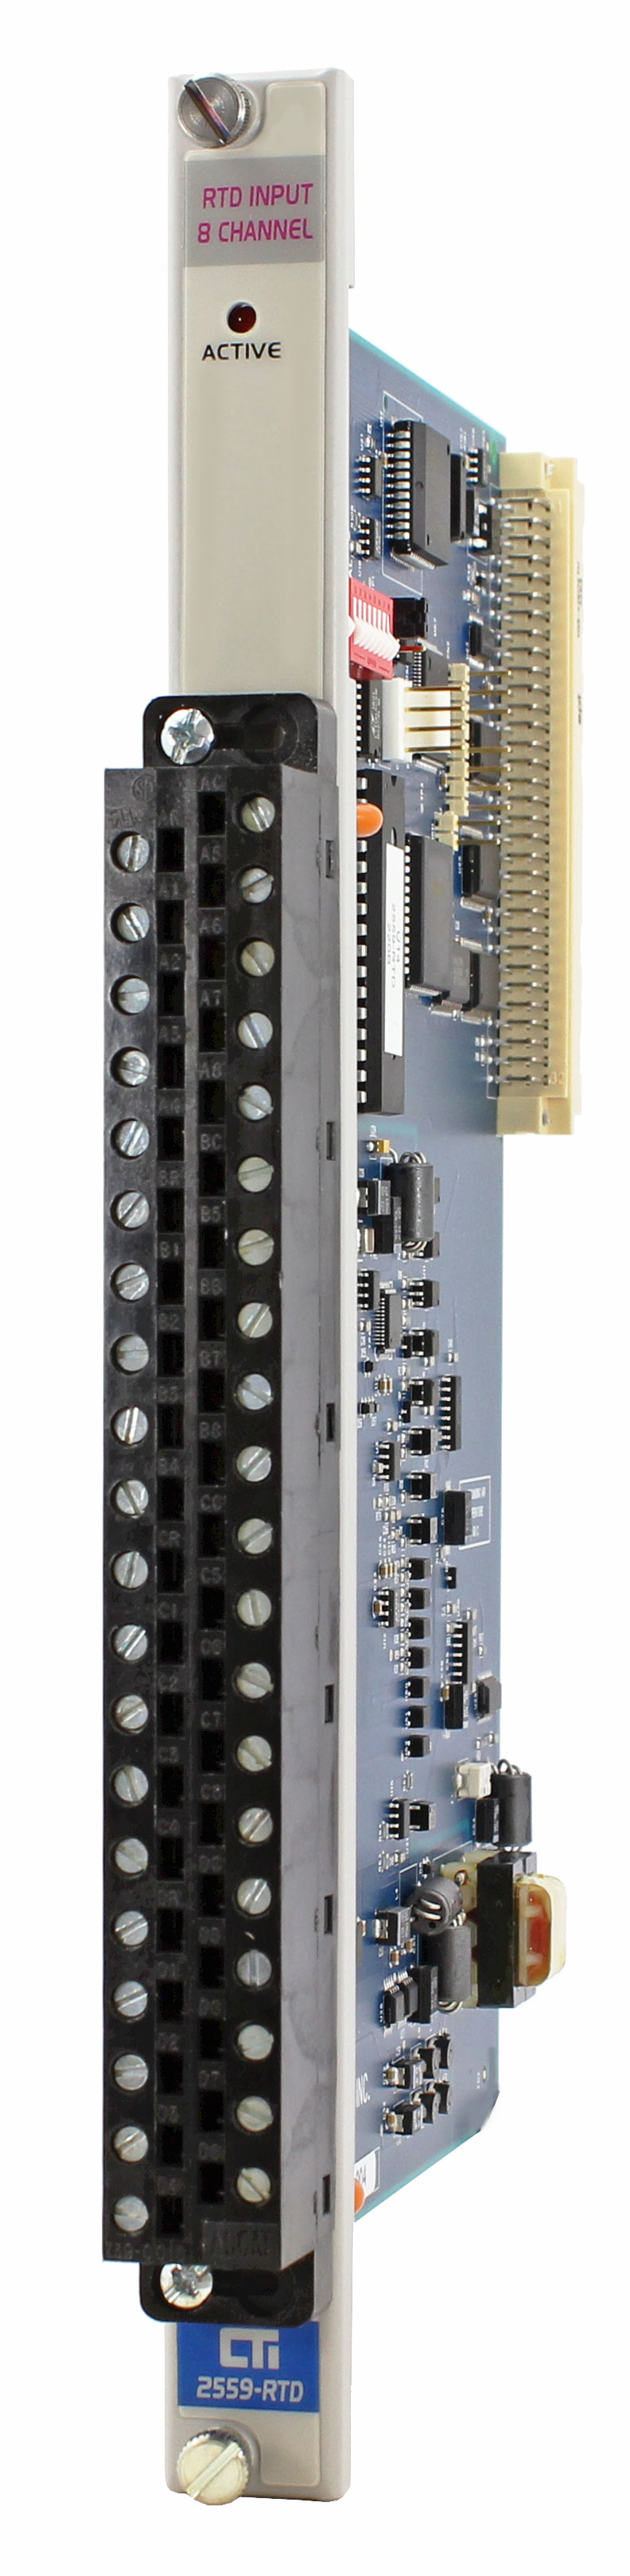 2559-RTD 8-Channel RTD Input Module